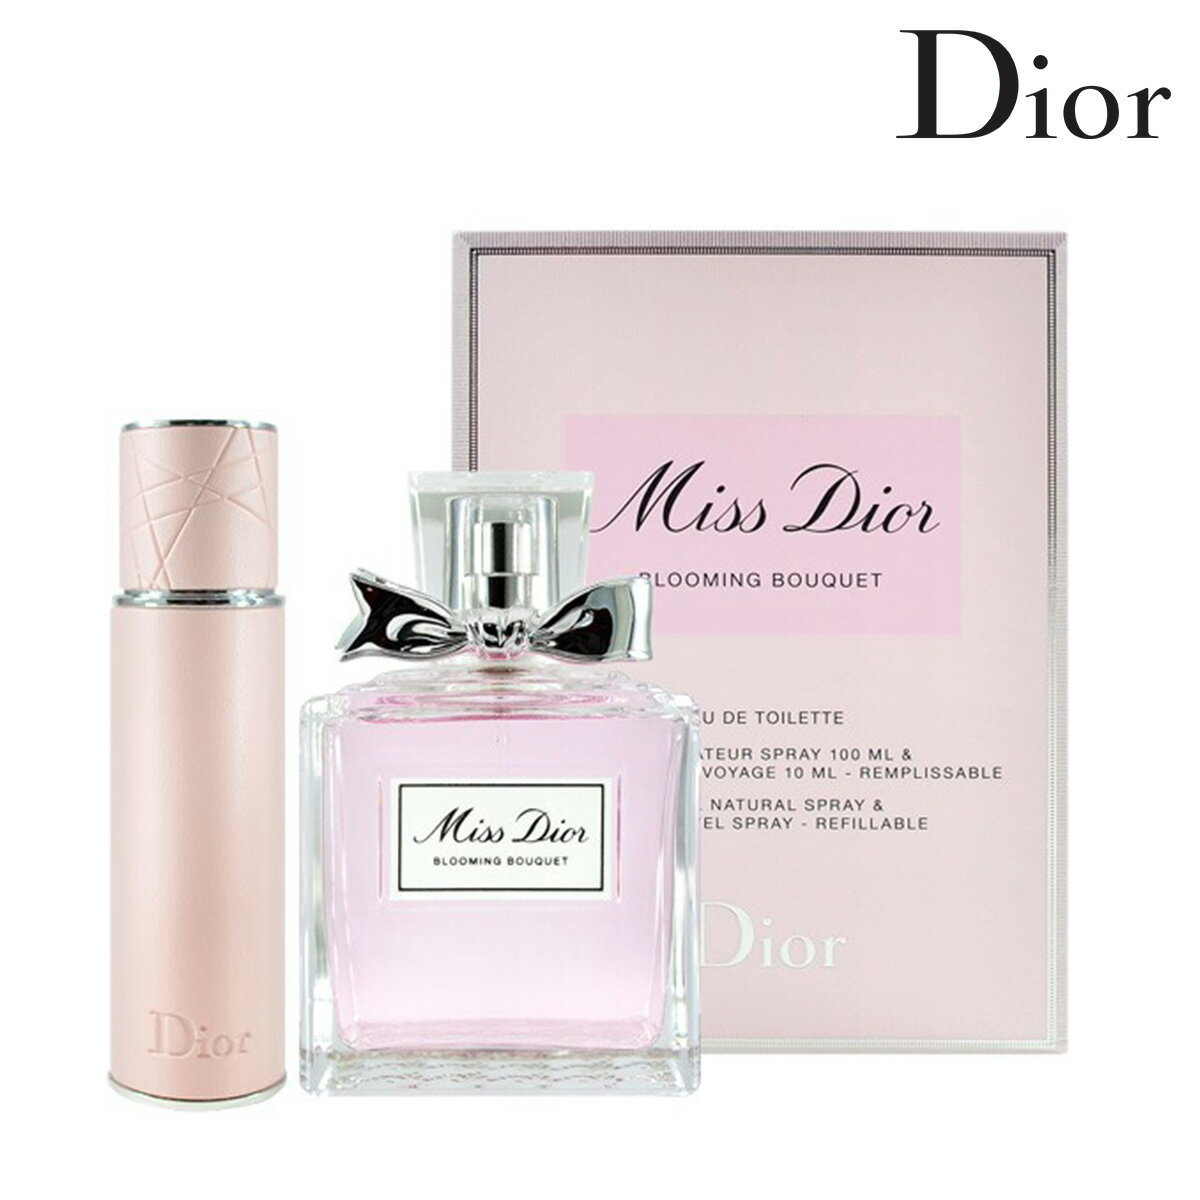 Dior 迪奧miss Dior 花漾女性淡香水禮盒 100ml 10ml 附隨身香水瓶 Sp嚴選家 Select Plus Rakuten樂天市場